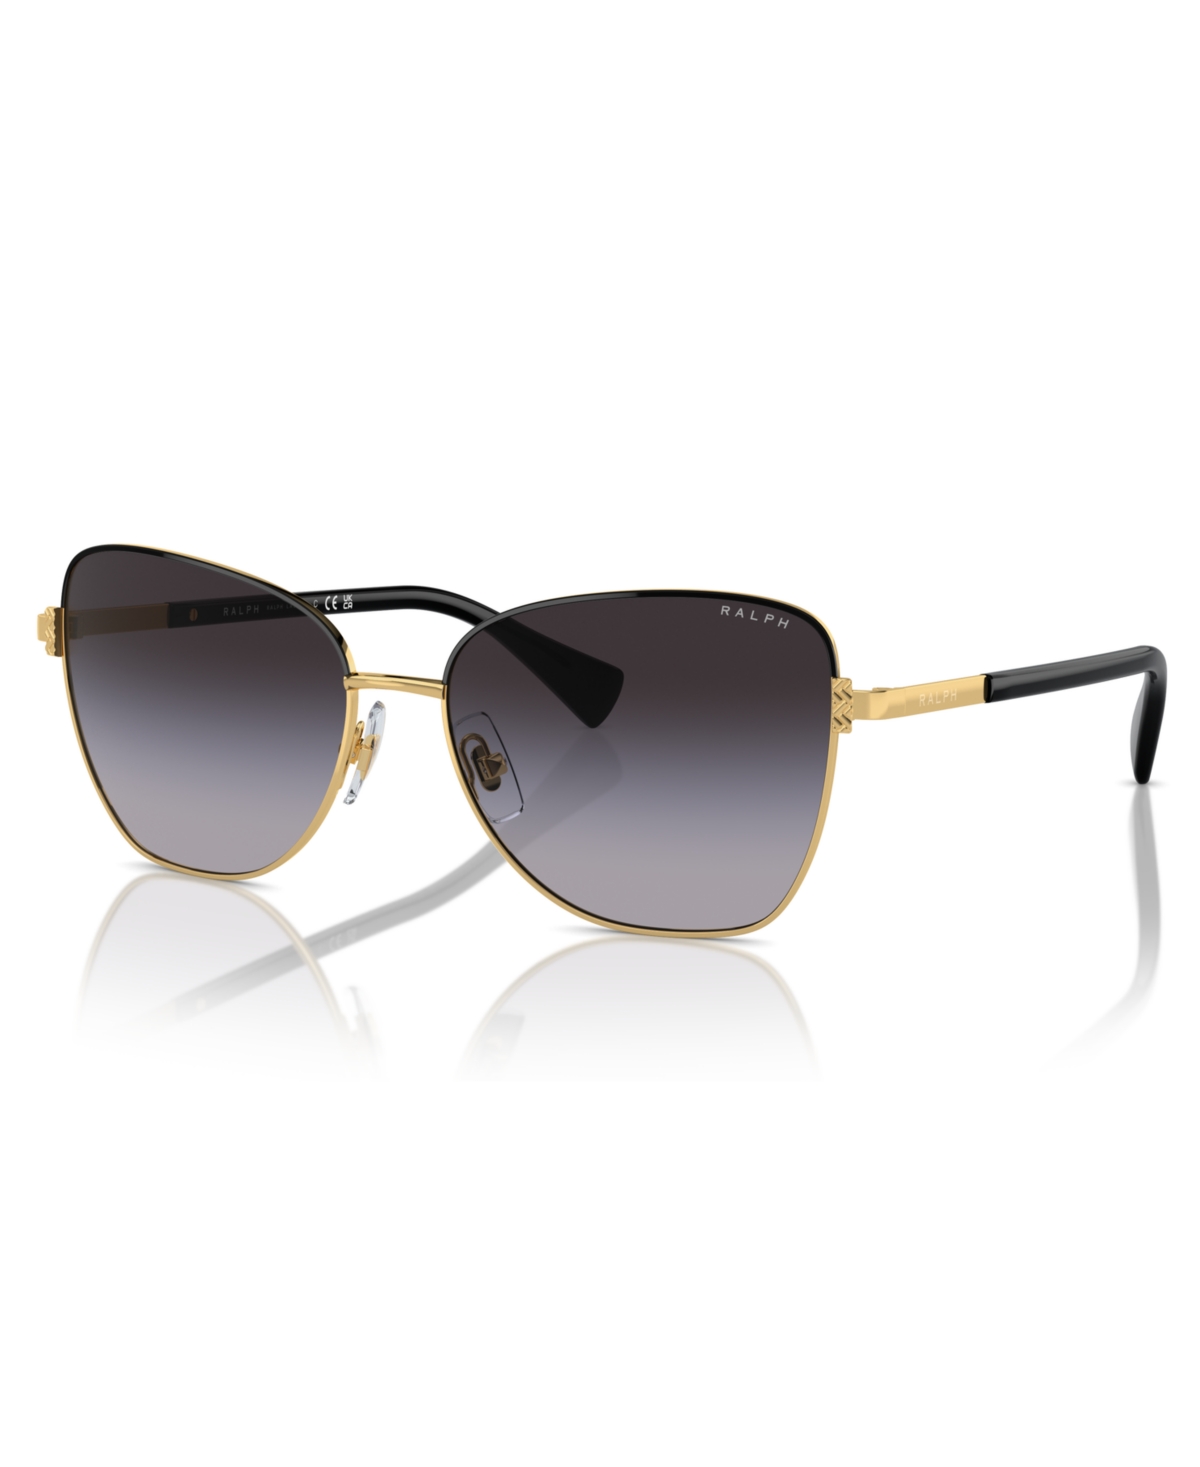 Women's Sunglasses, Ra4146 - Shiny Gold, Brown